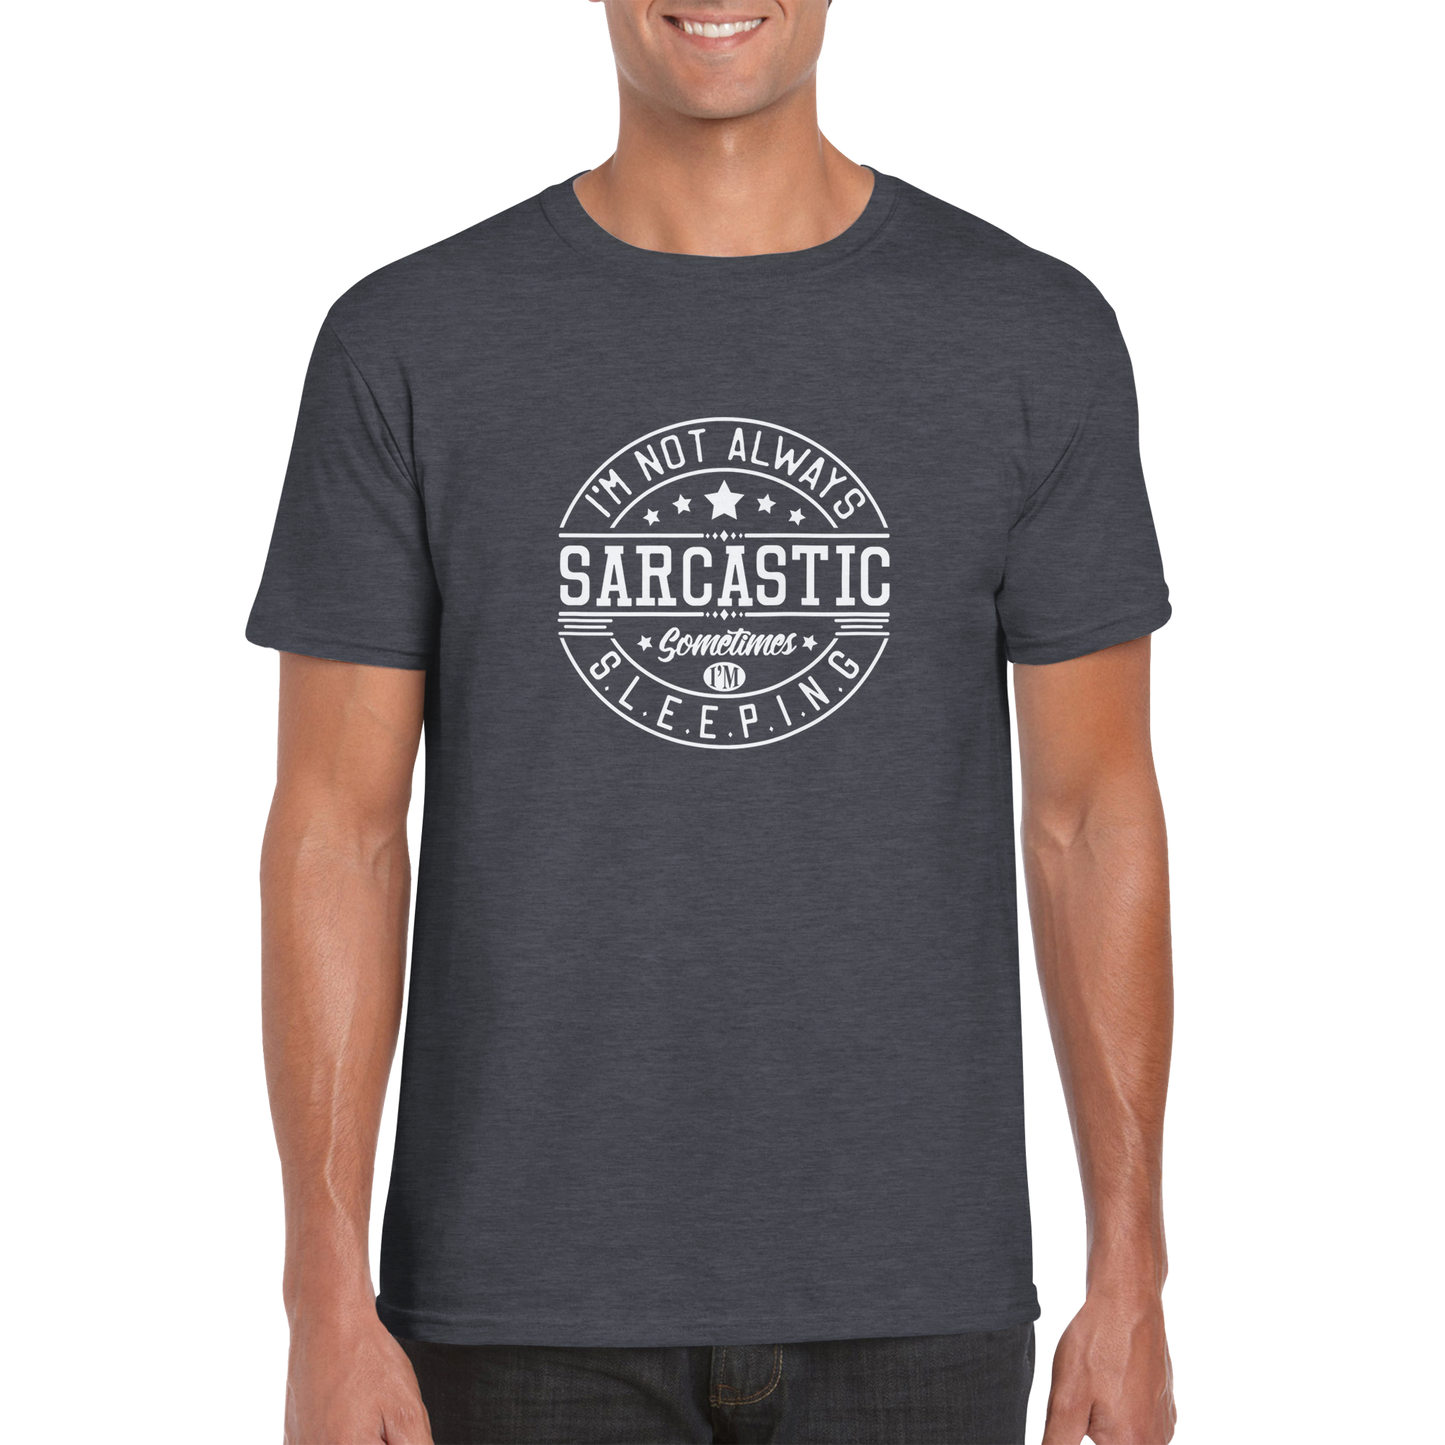 Not Always Sarcastic Sarcasm Shirt - Classic Unisex Crewneck T-shirt